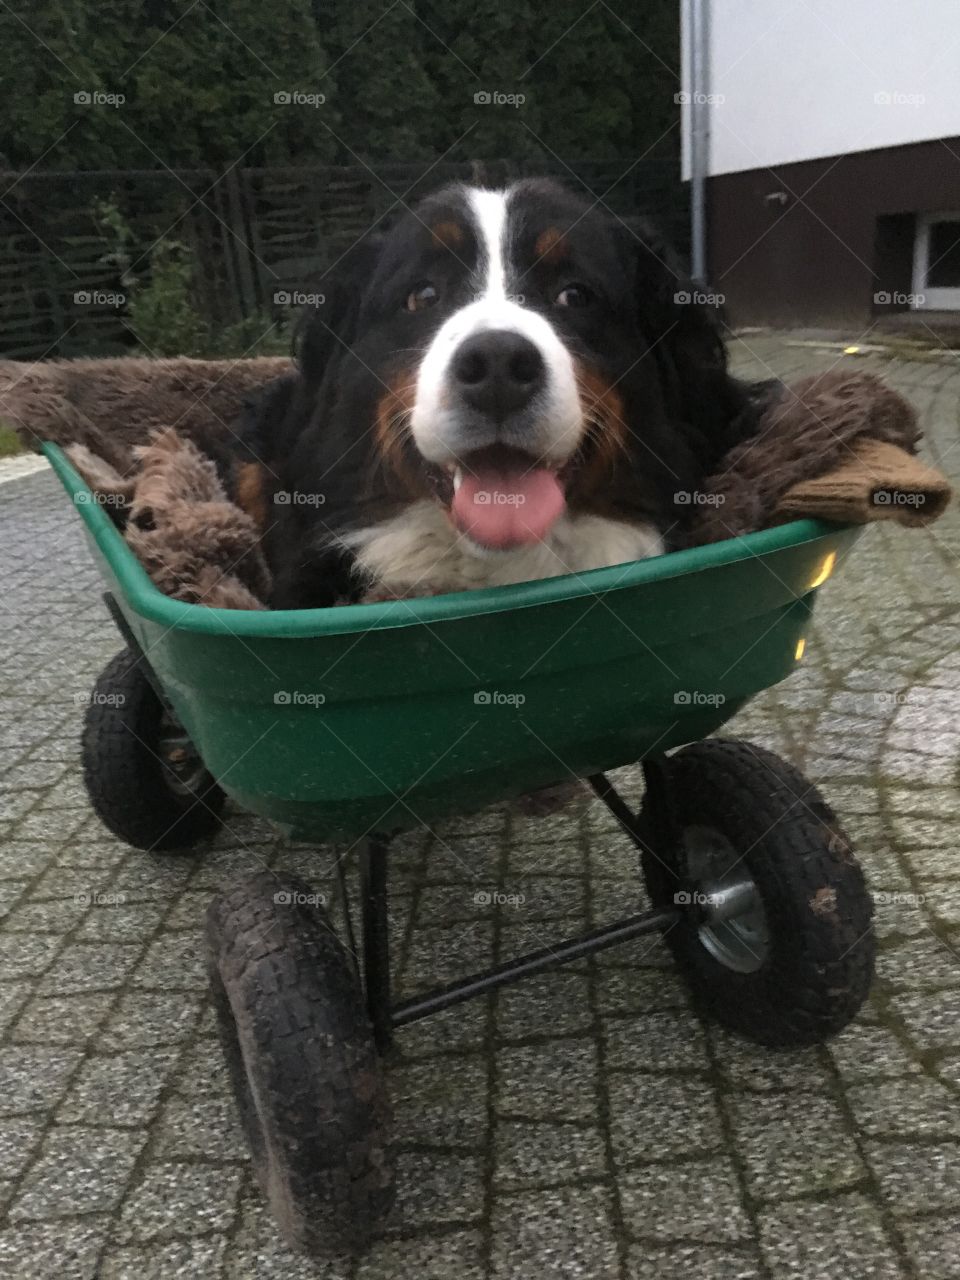 Dog in wheelbarrow
